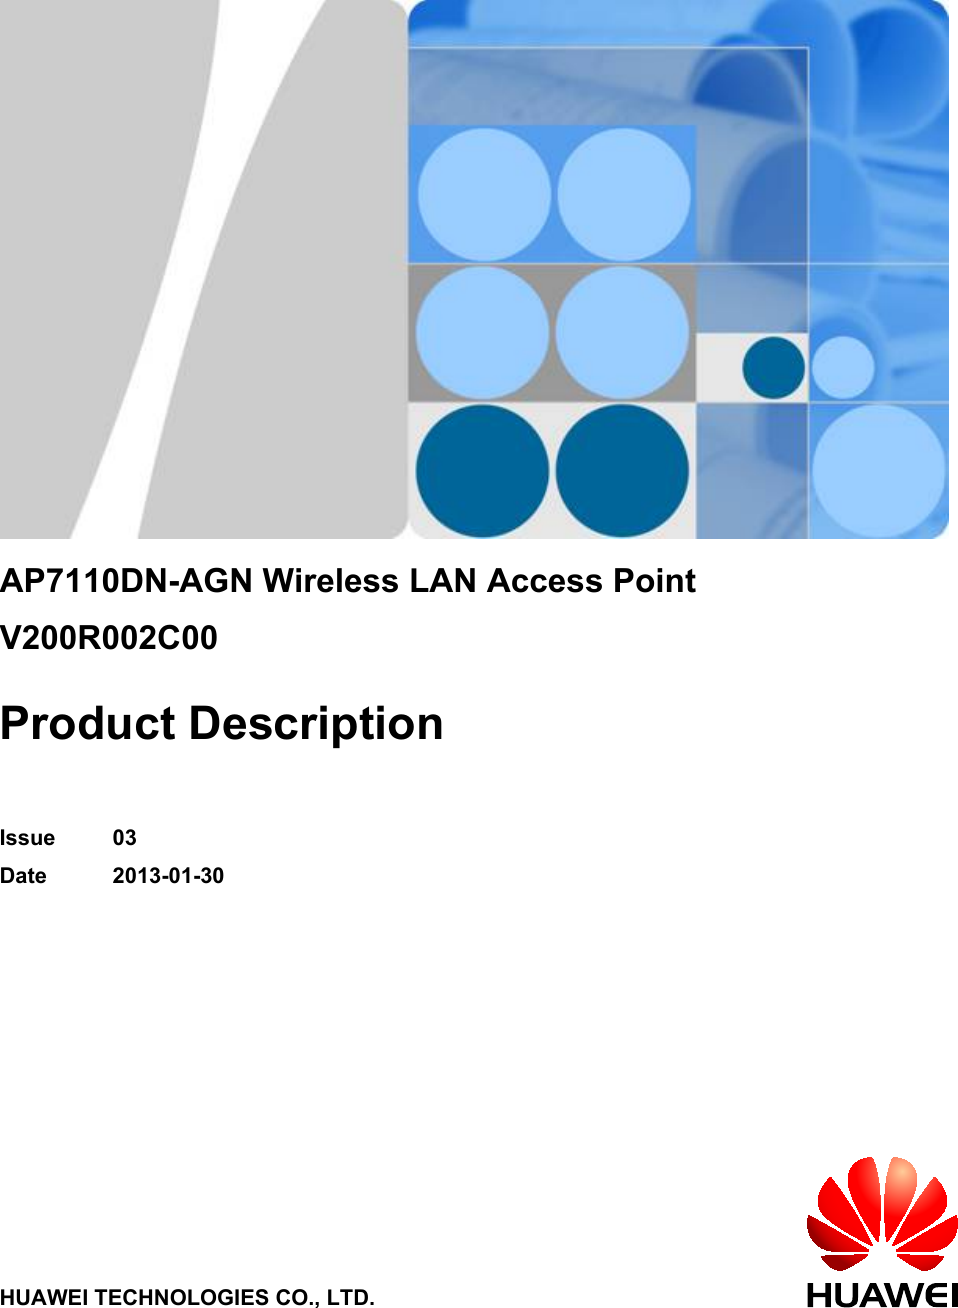 AP7110DN-AGN Wireless LAN Access PointV200R002C00Product DescriptionIssue 03Date 2013-01-30HUAWEI TECHNOLOGIES CO., LTD.